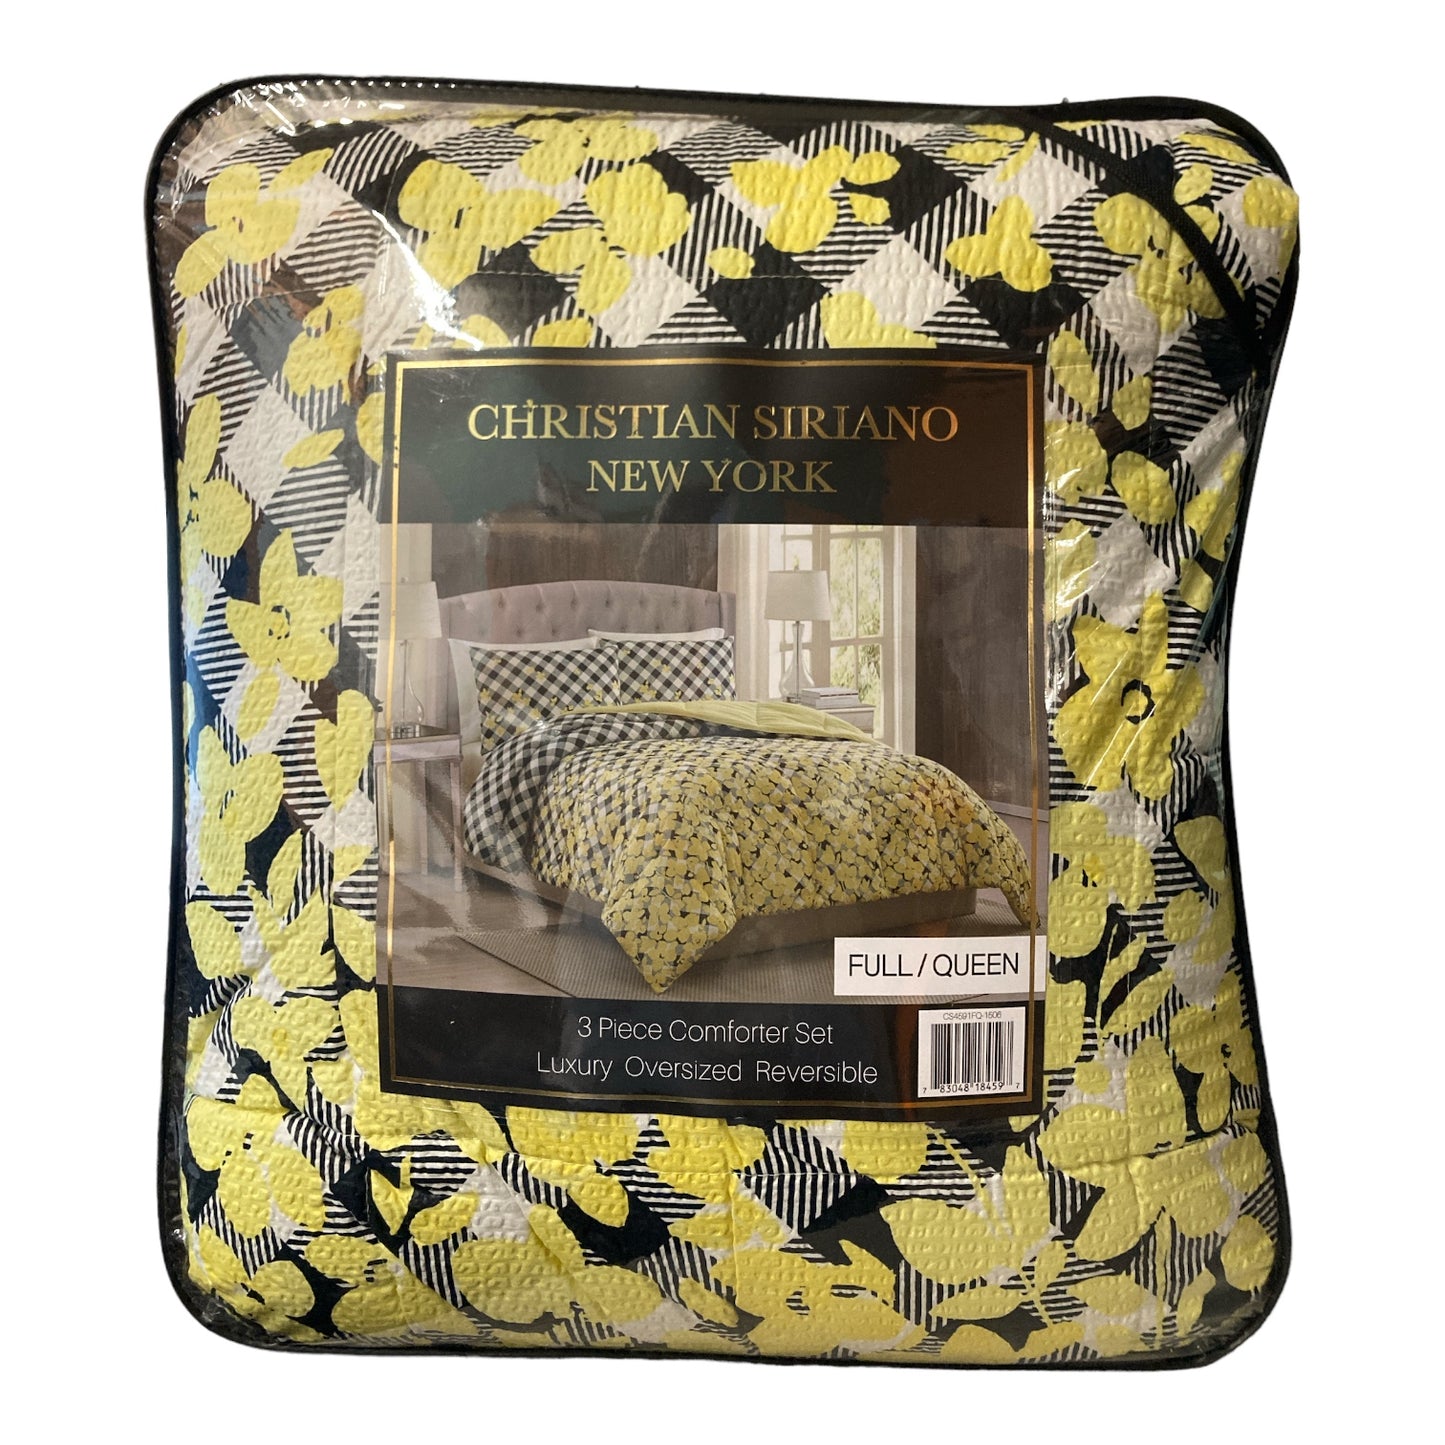 Christian Siriano 3 Piece Oversized Luxury Reversible Comforter Set, Yellow, Queen